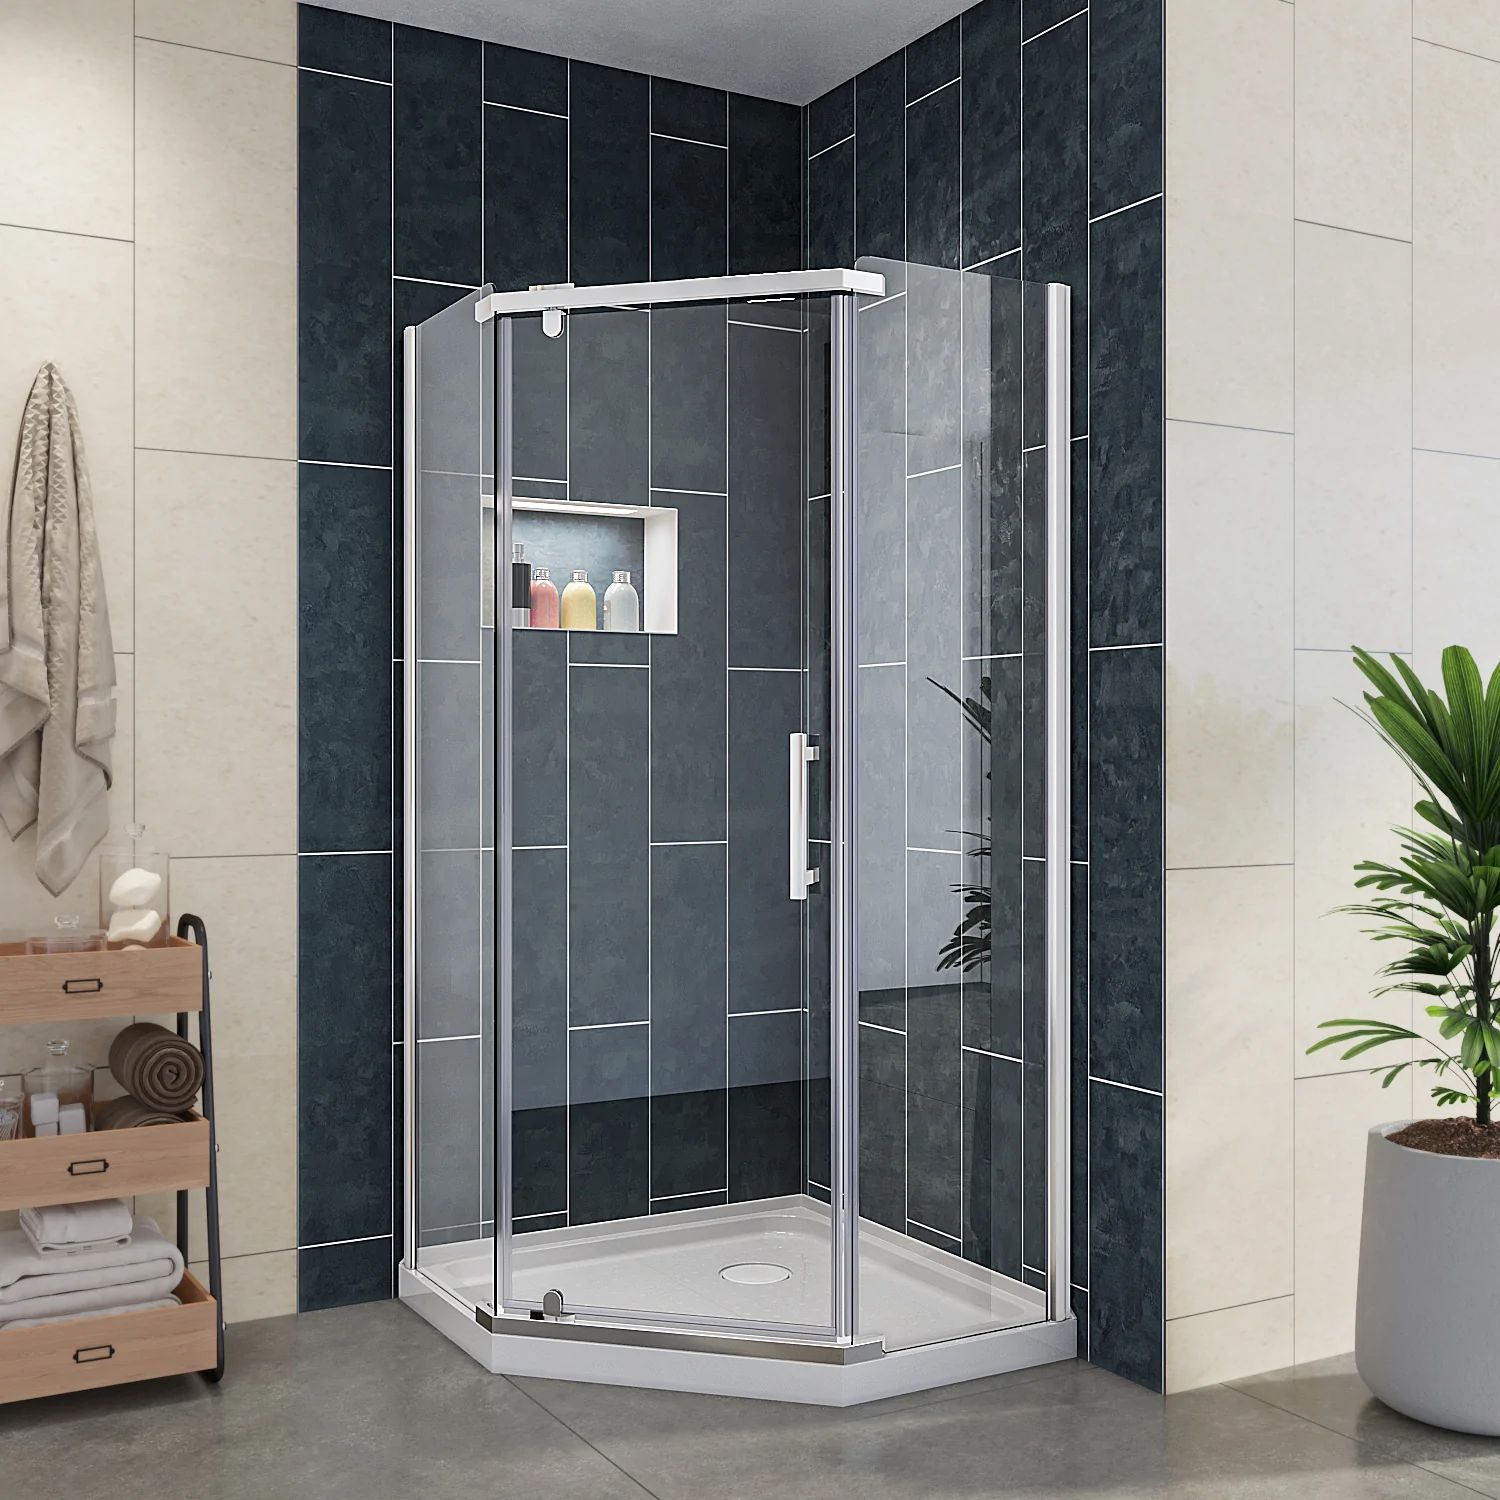 Rainier Deluxe Sliding Tub Shower Door